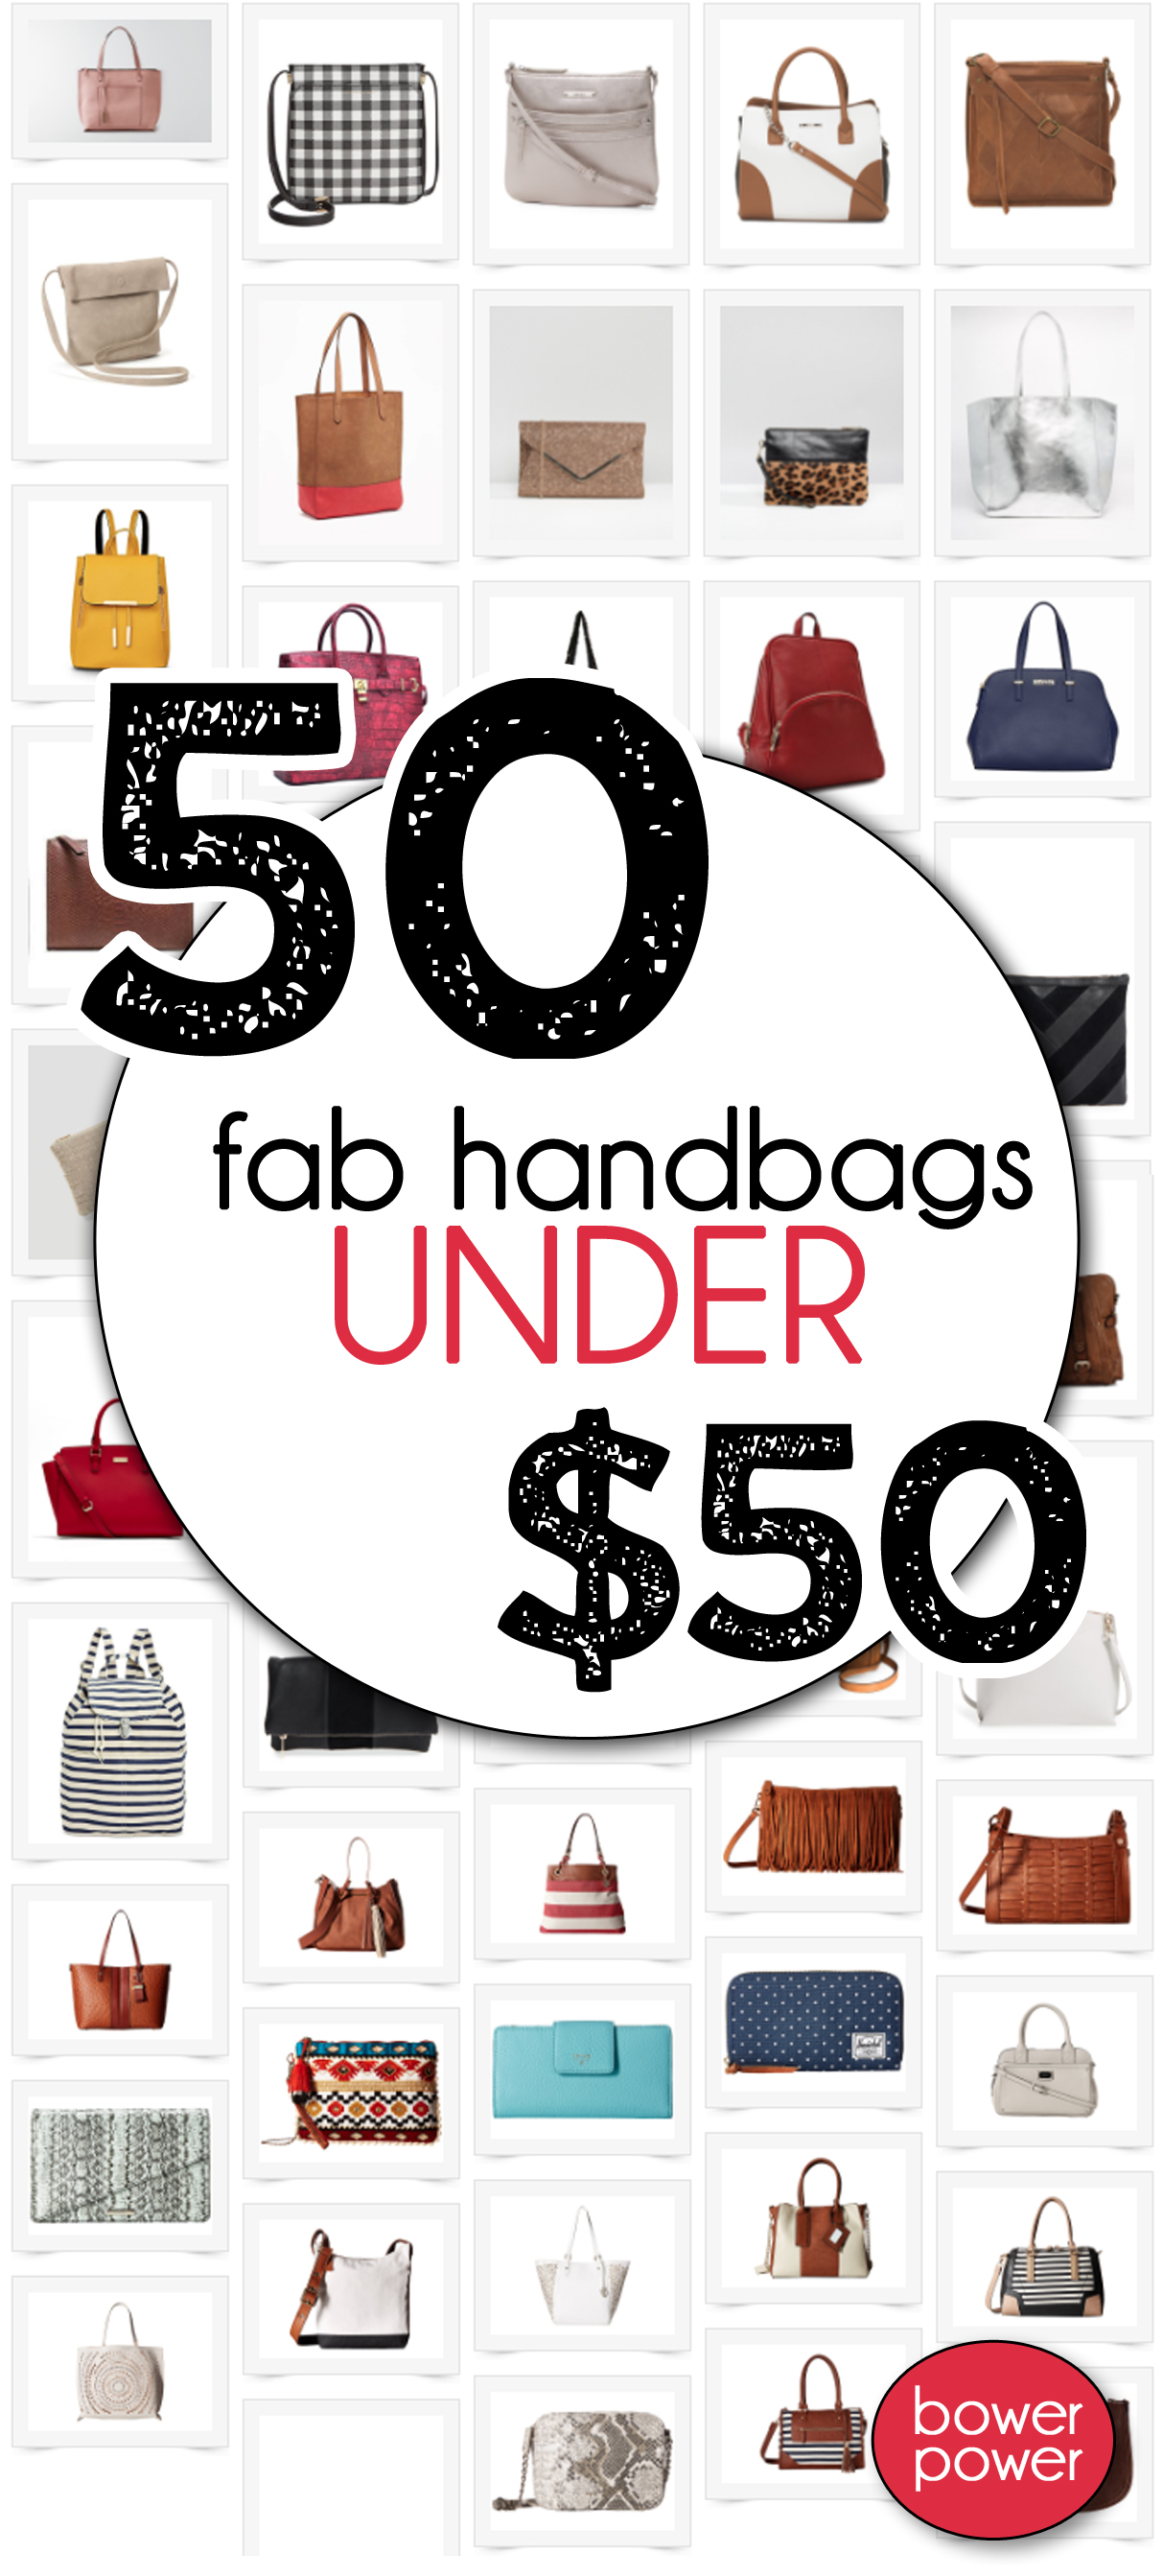 Fifty Handbags under $50 - Bower Power